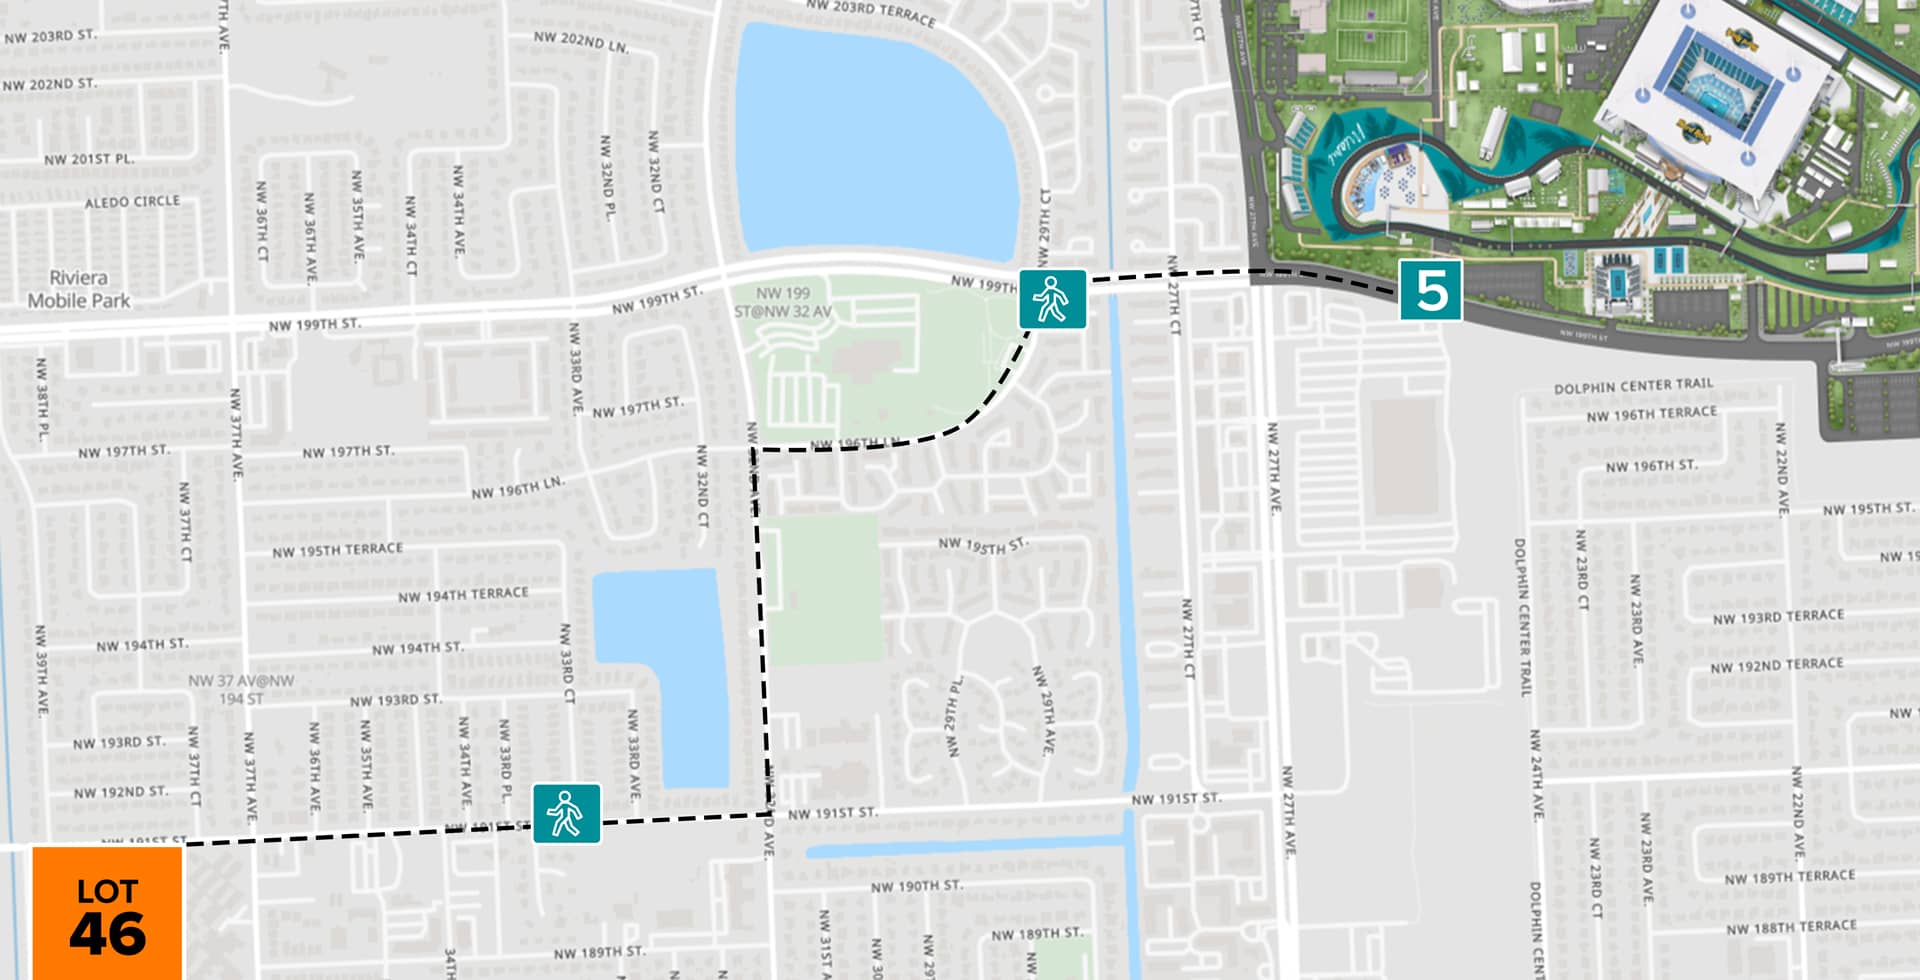 Parking Lot Location Map for Orange Lot 46 at the Formula 1 Crypto.com Miami Grand Prix